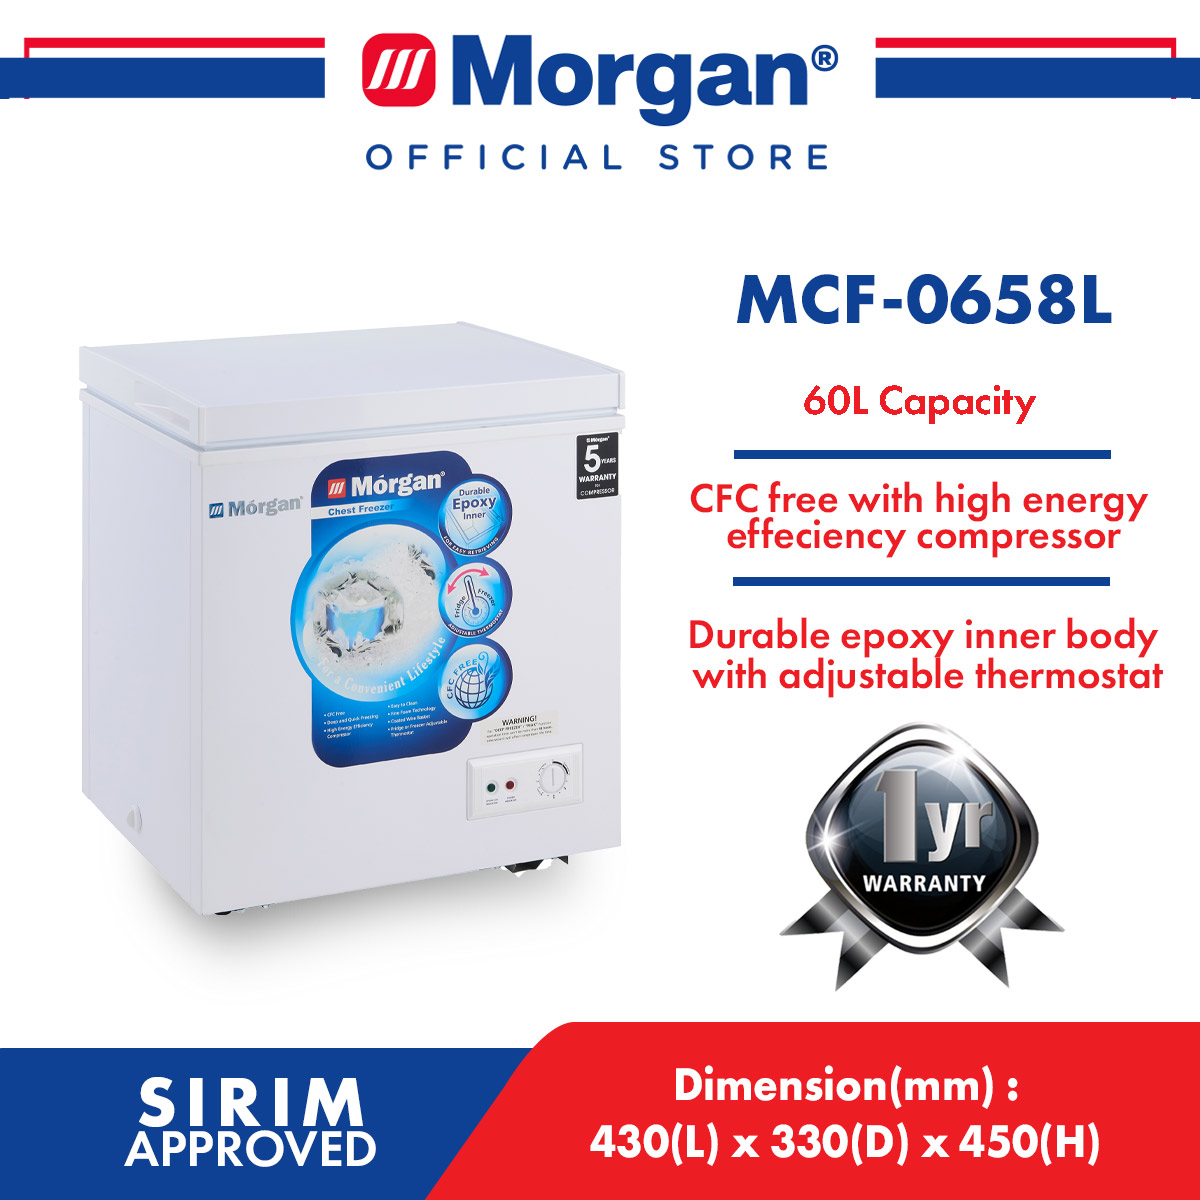 MORGAN MCF-0658L CHEST FREEZER 60L